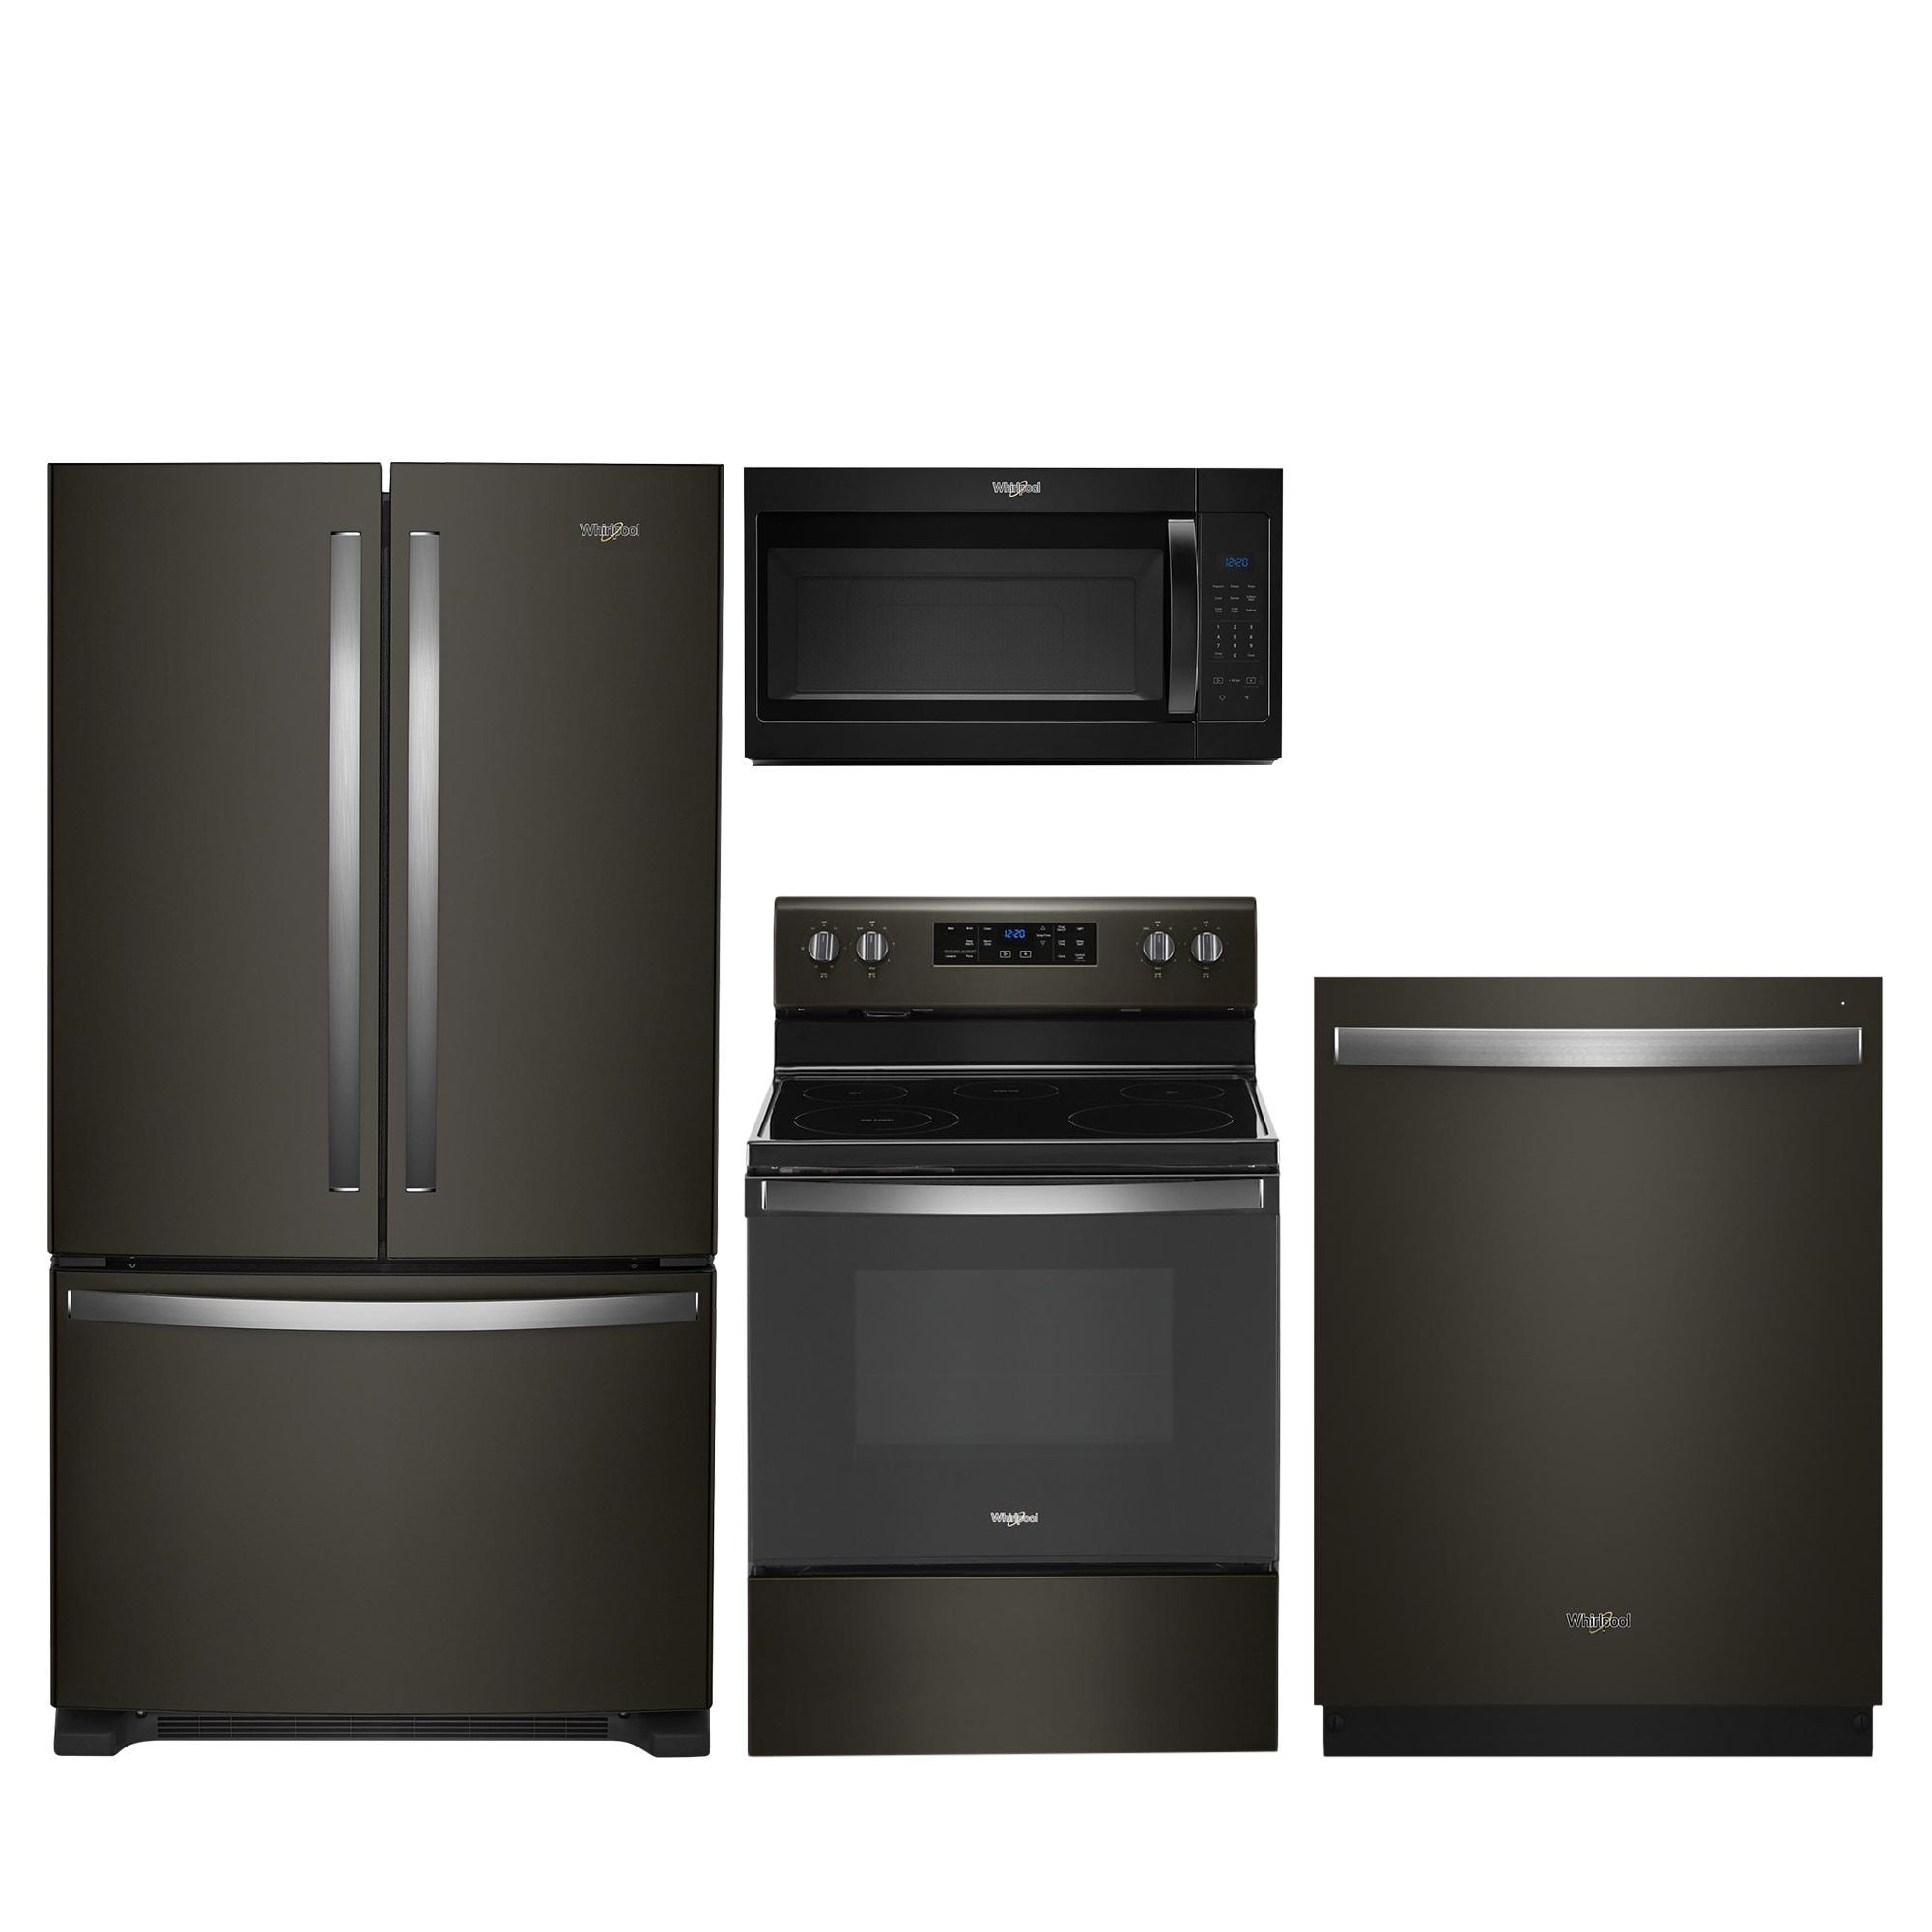 Black Stainless Steel Appliances - Best Buy